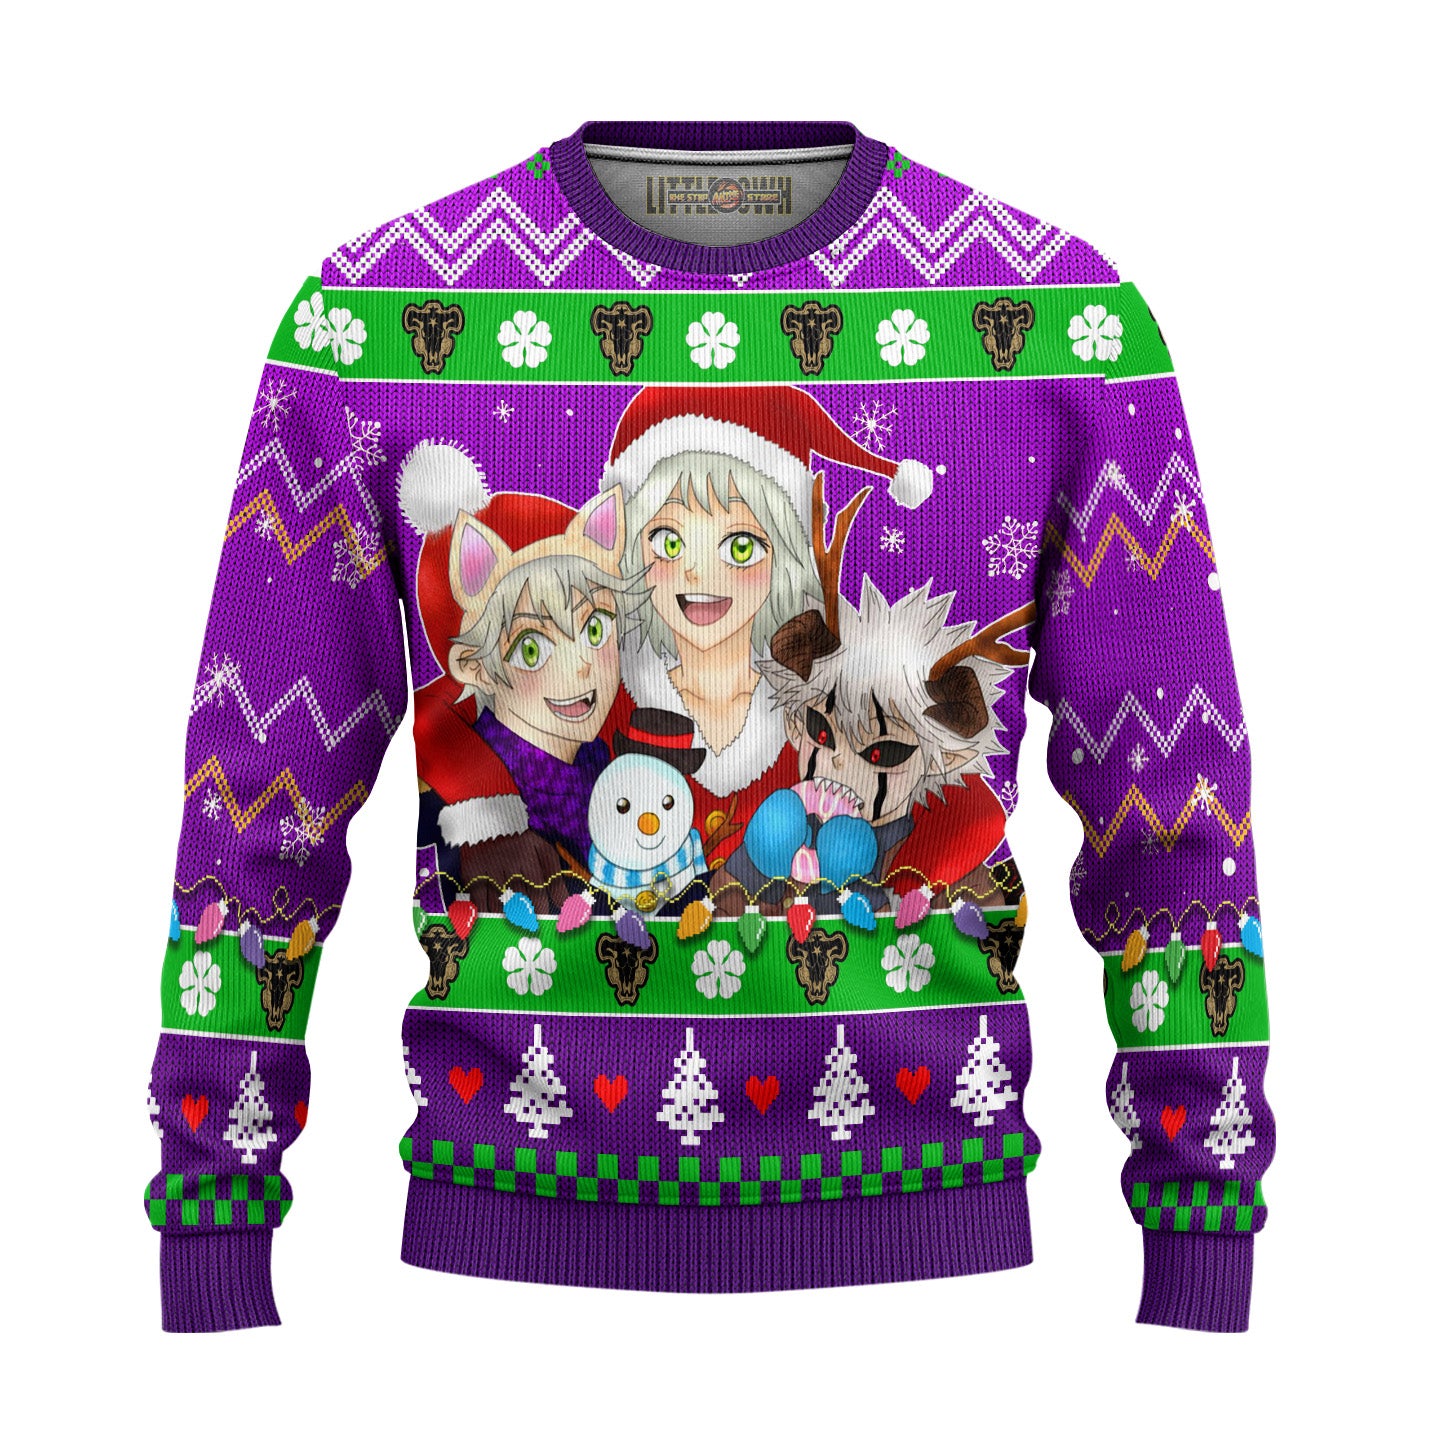 Black Clover Anime Ugly Christmas Sweater Purple New Design